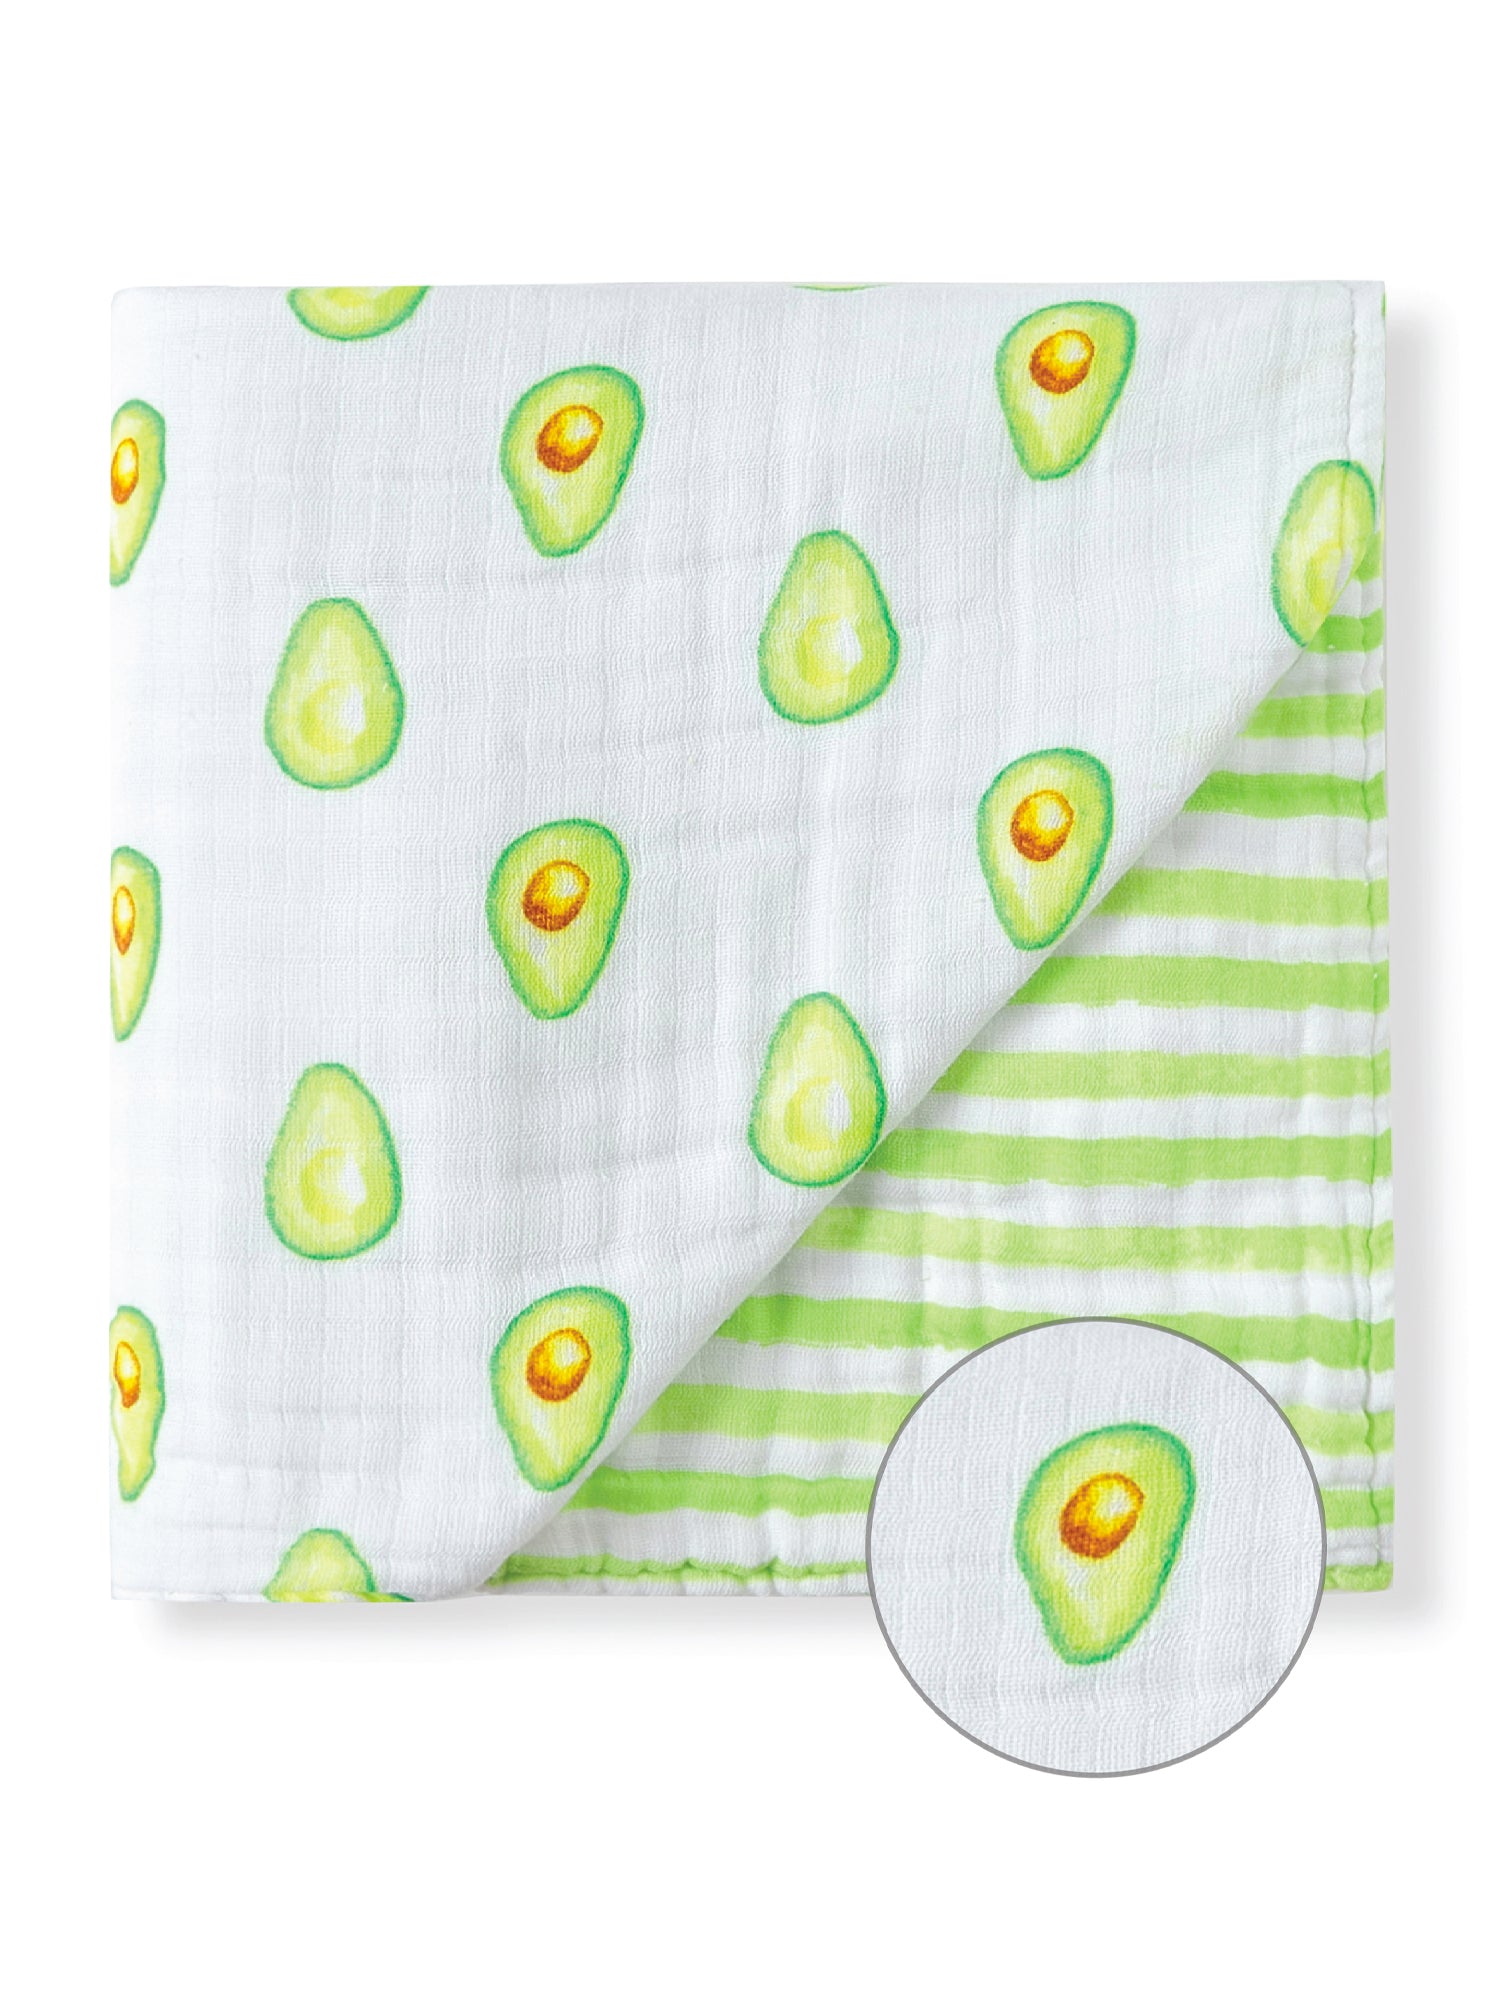 Organic Snug Blanket - Avocado